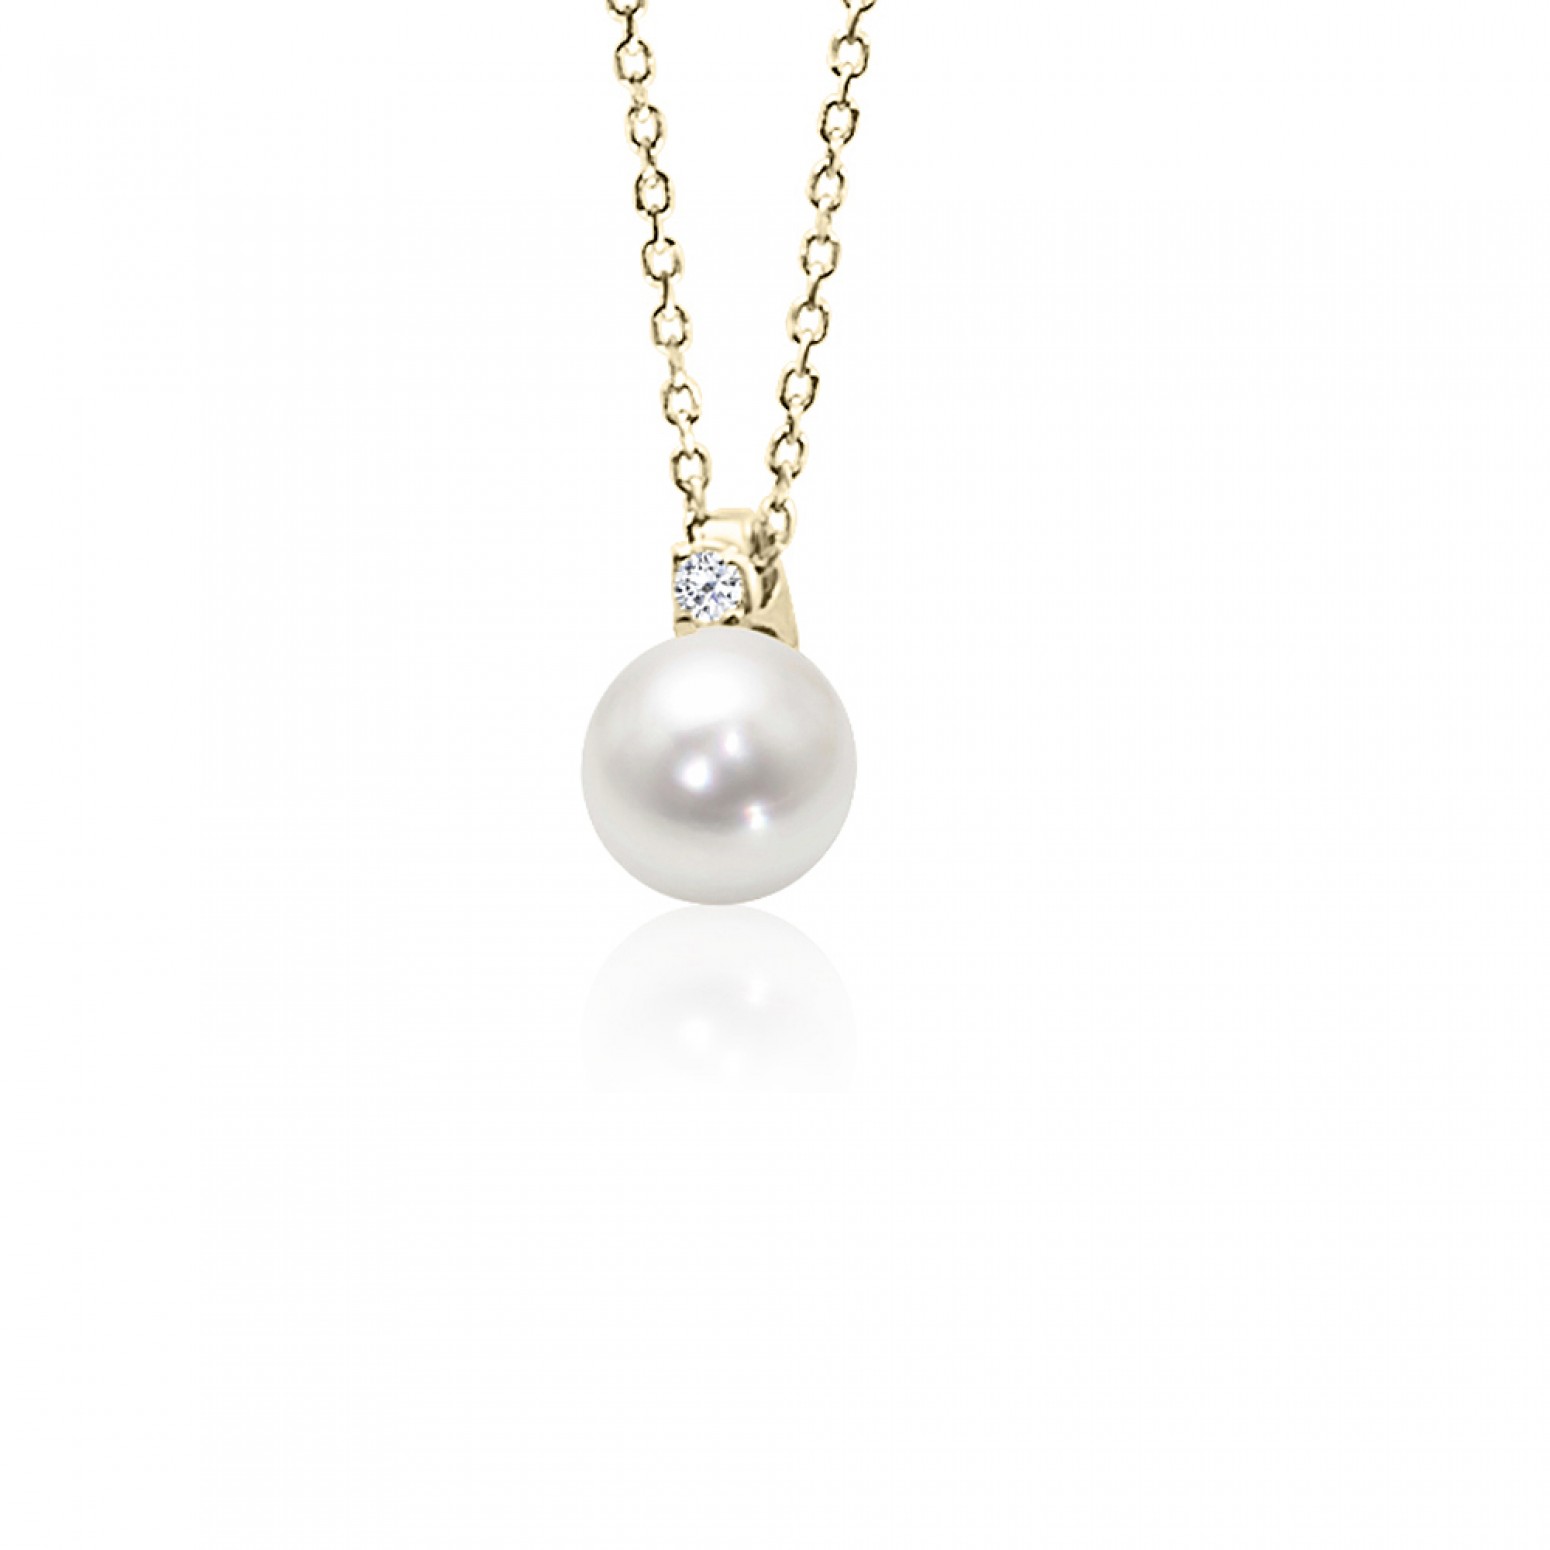 Necklace, Κ9 gold with pearl and zircon, ko4948 NECKLACES Κοσμηματα - chrilia.gr